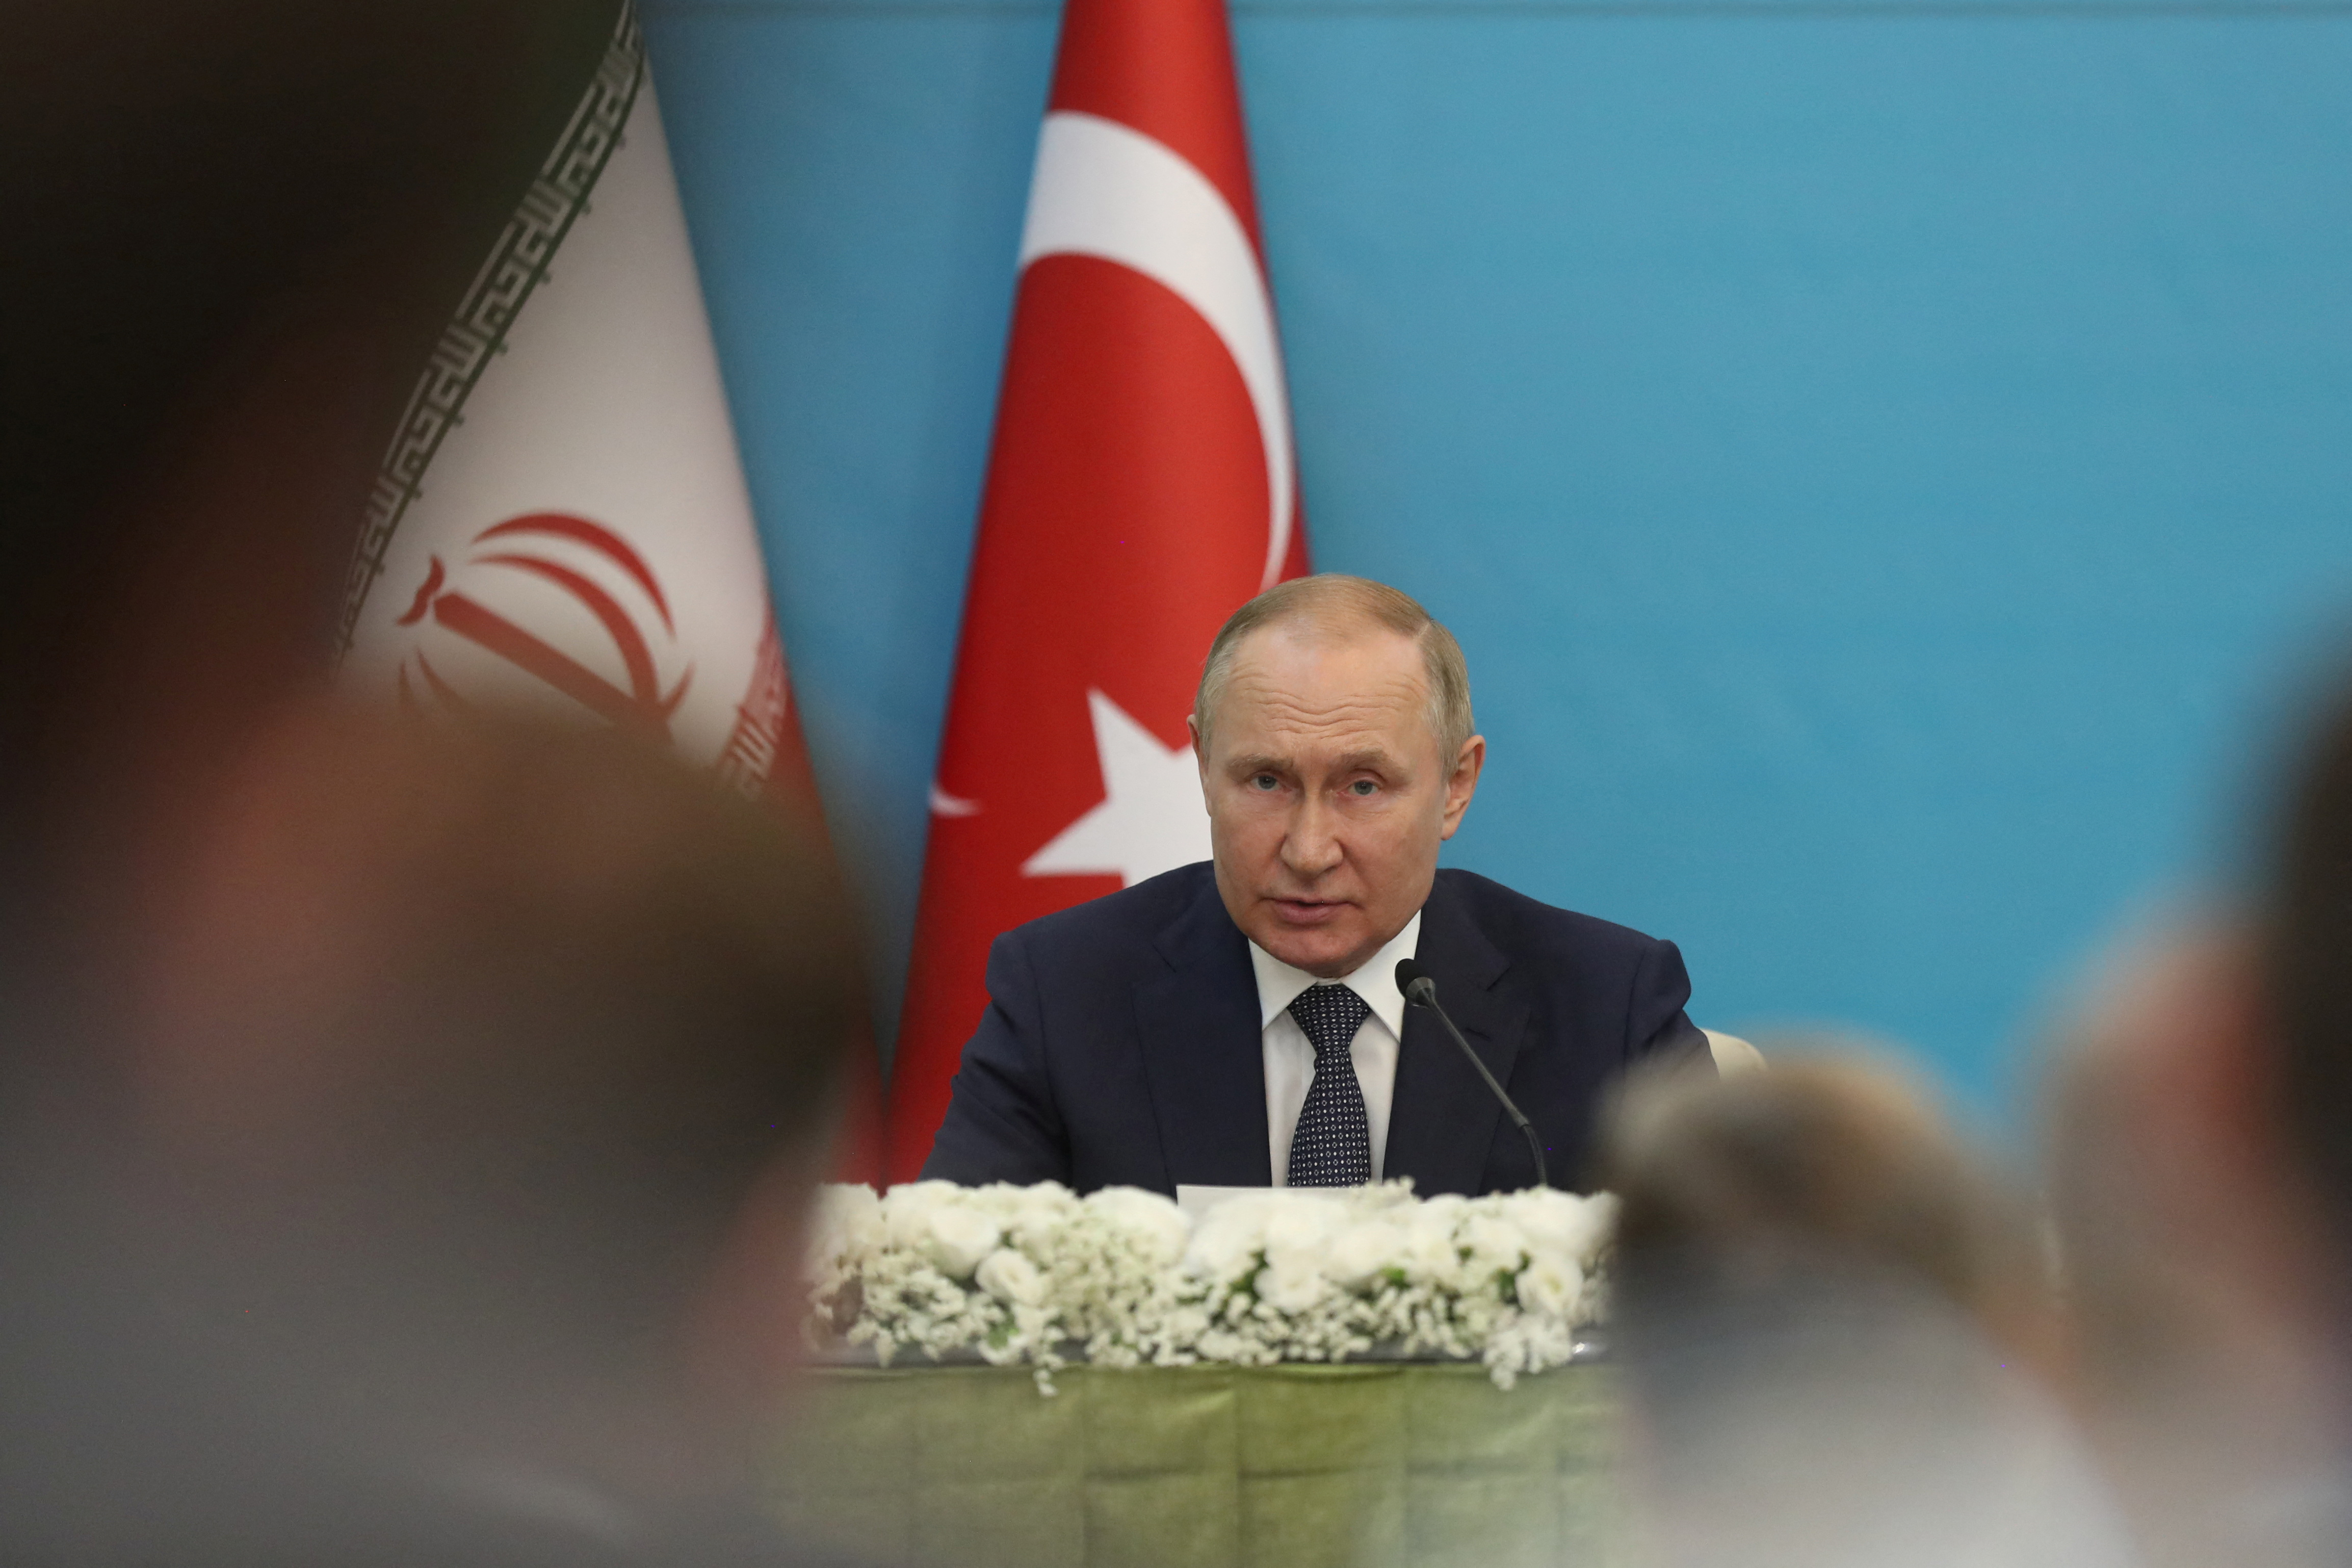 Russian President Vladimir Putin attends a news conference following the Astana Process summit in Tehran